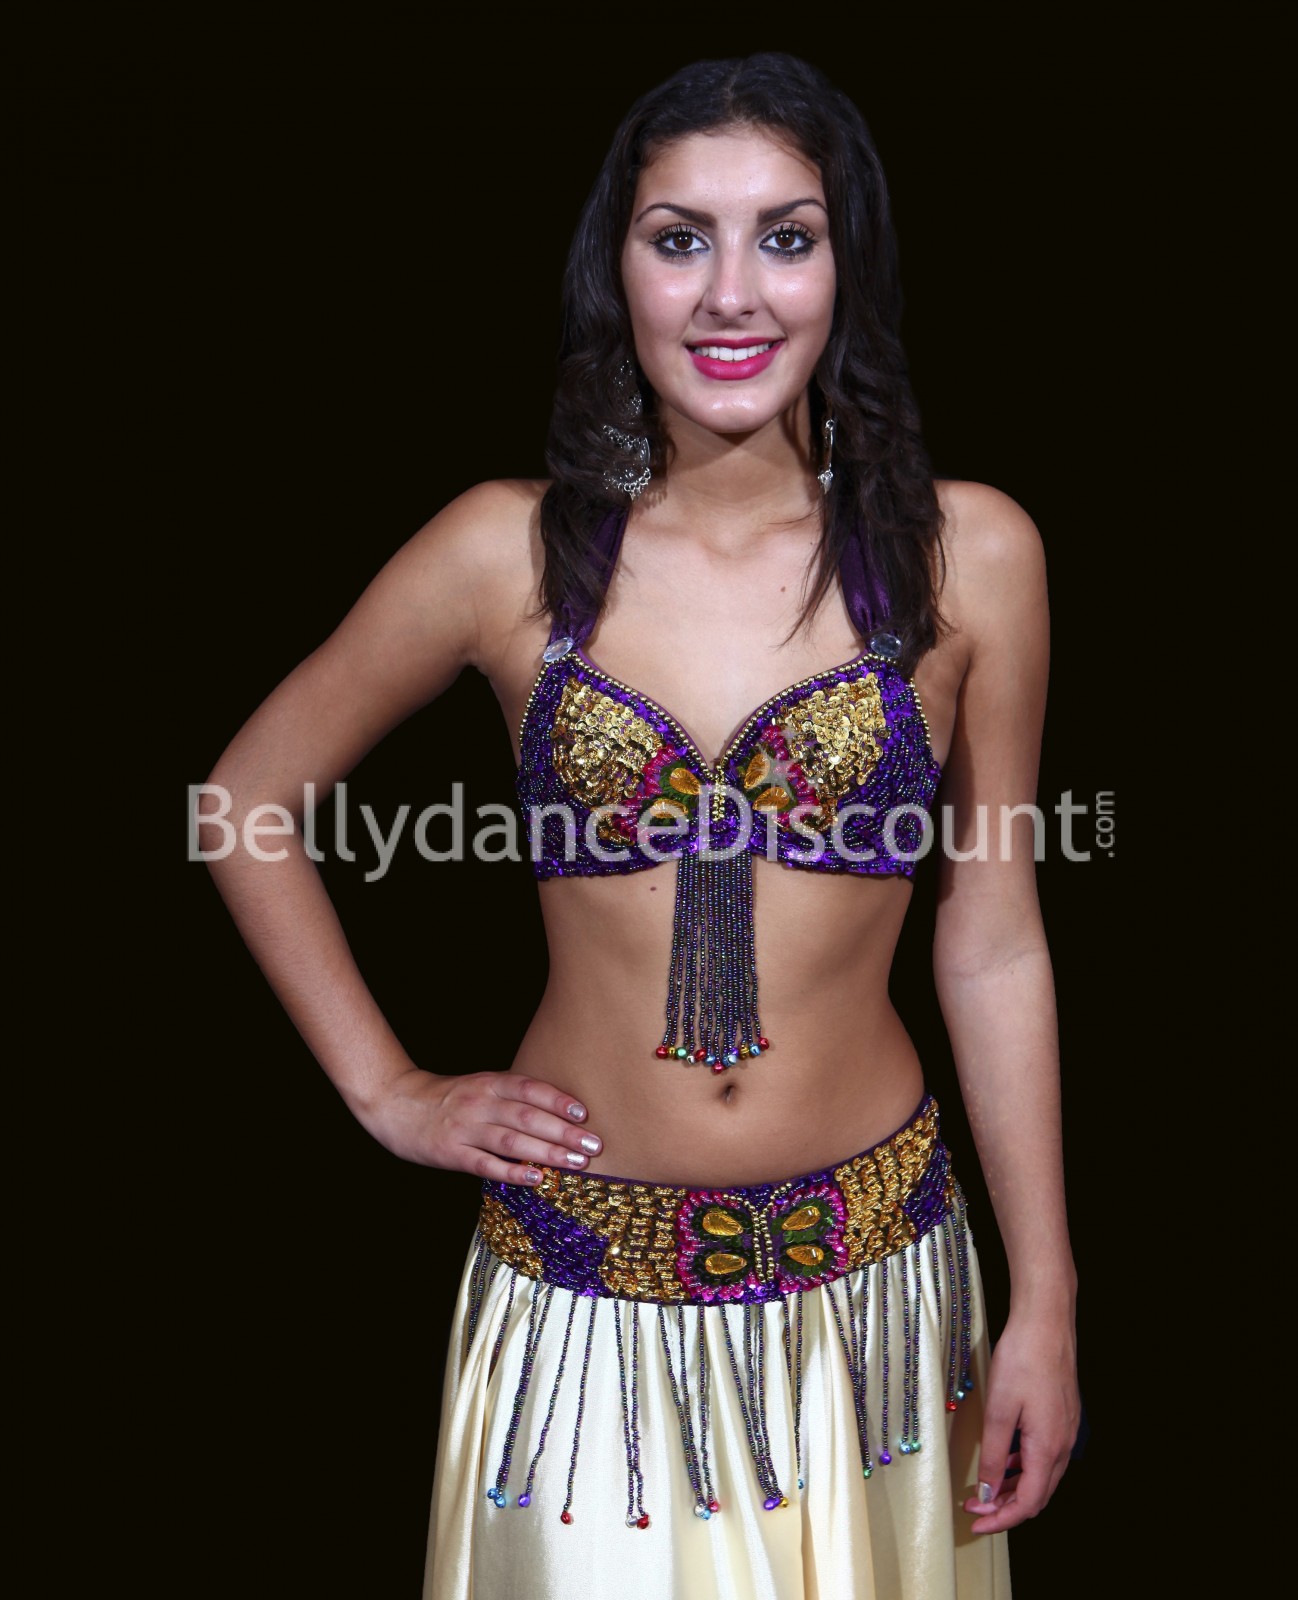 Bellydance bra + belt set purple and gold - 49,90 €